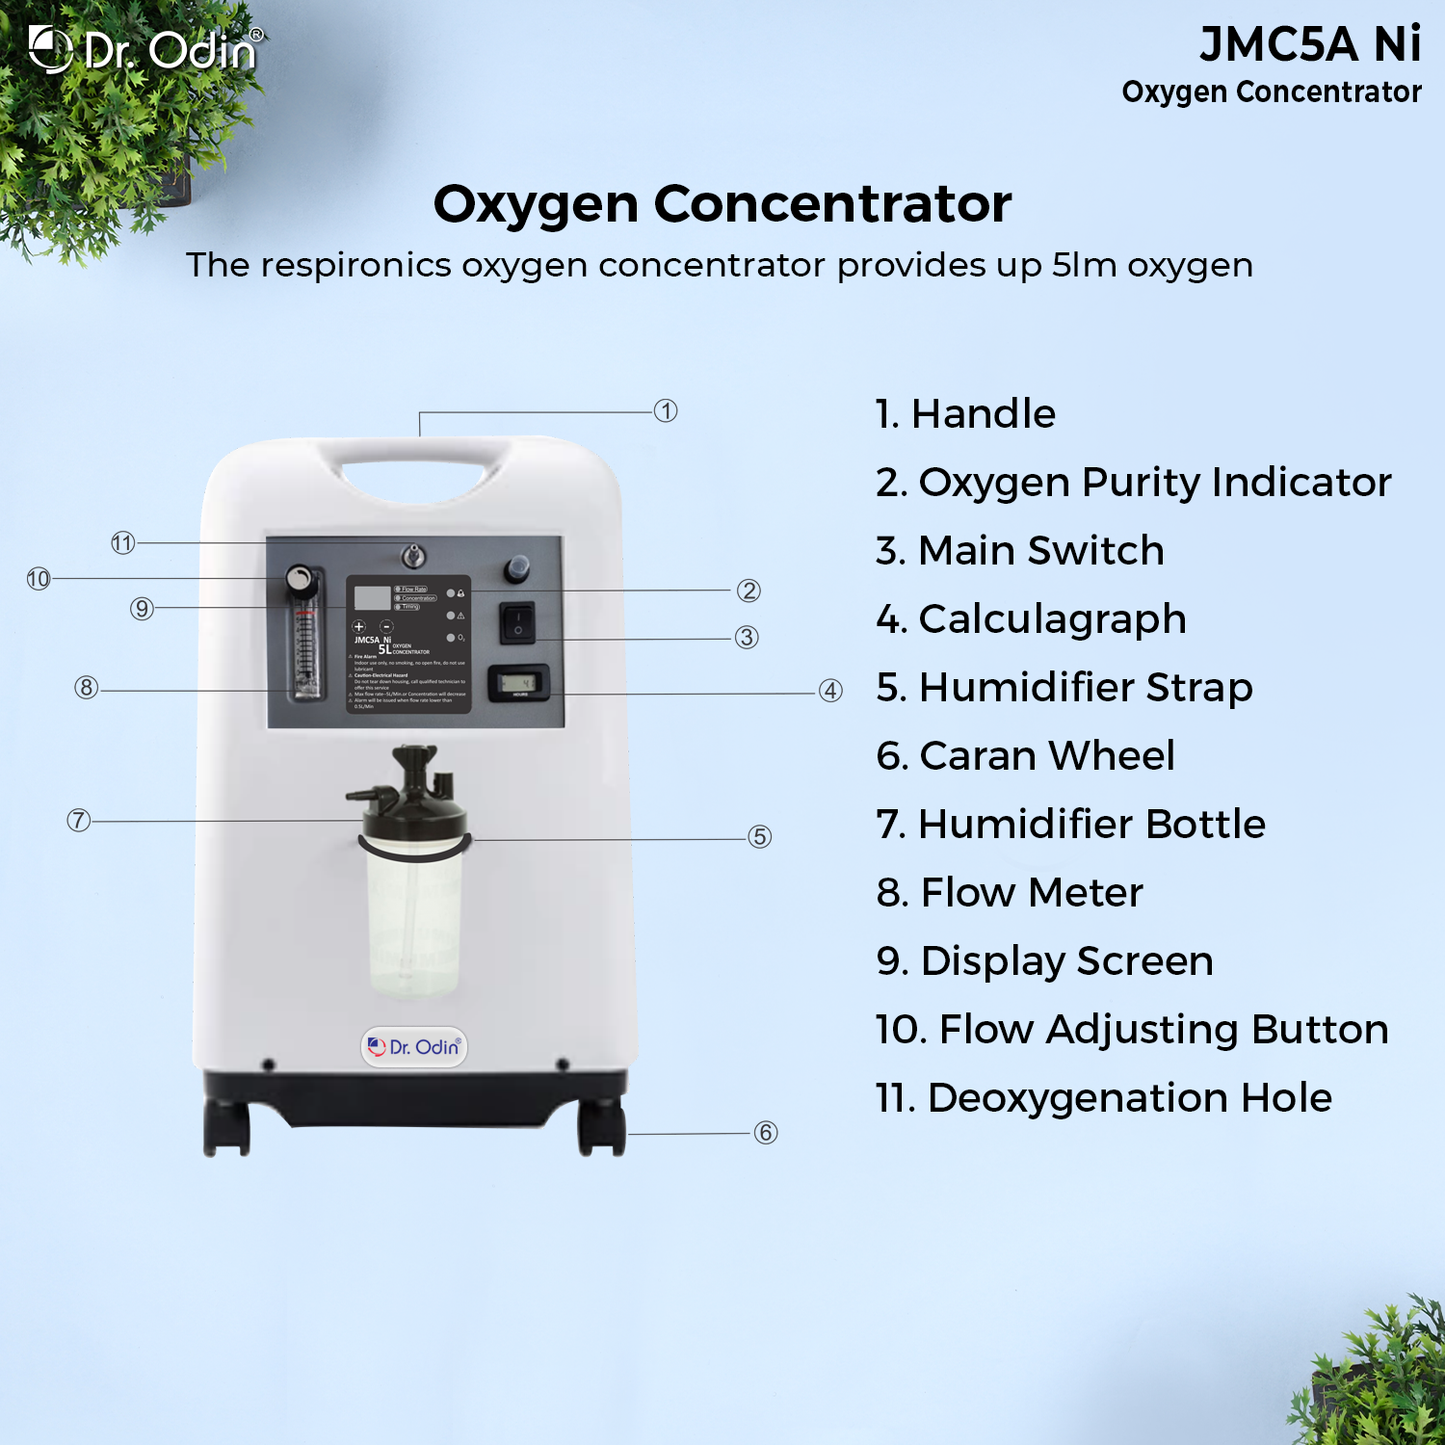 Oxygen Concentrator JMC5A Ni